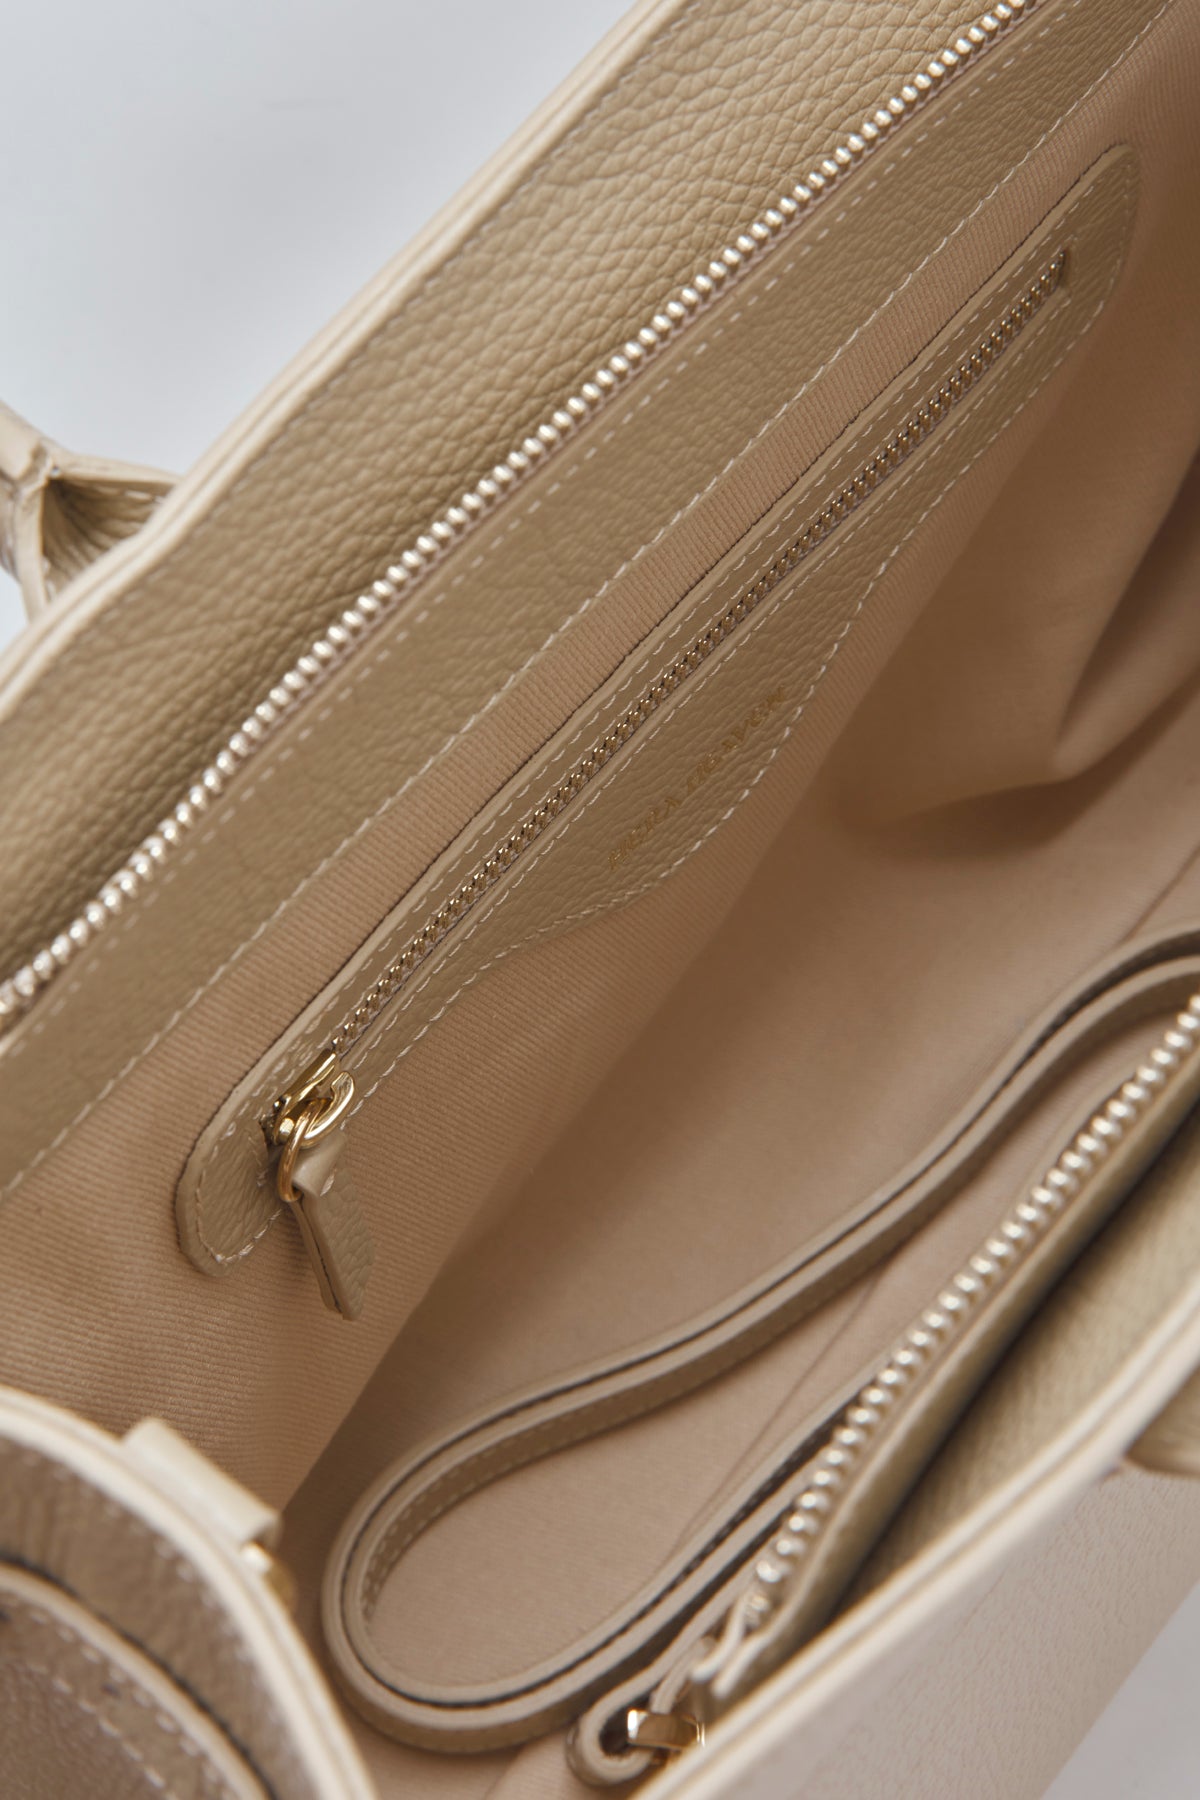 beige sand ouroboros genuine leather women's tote bag inside